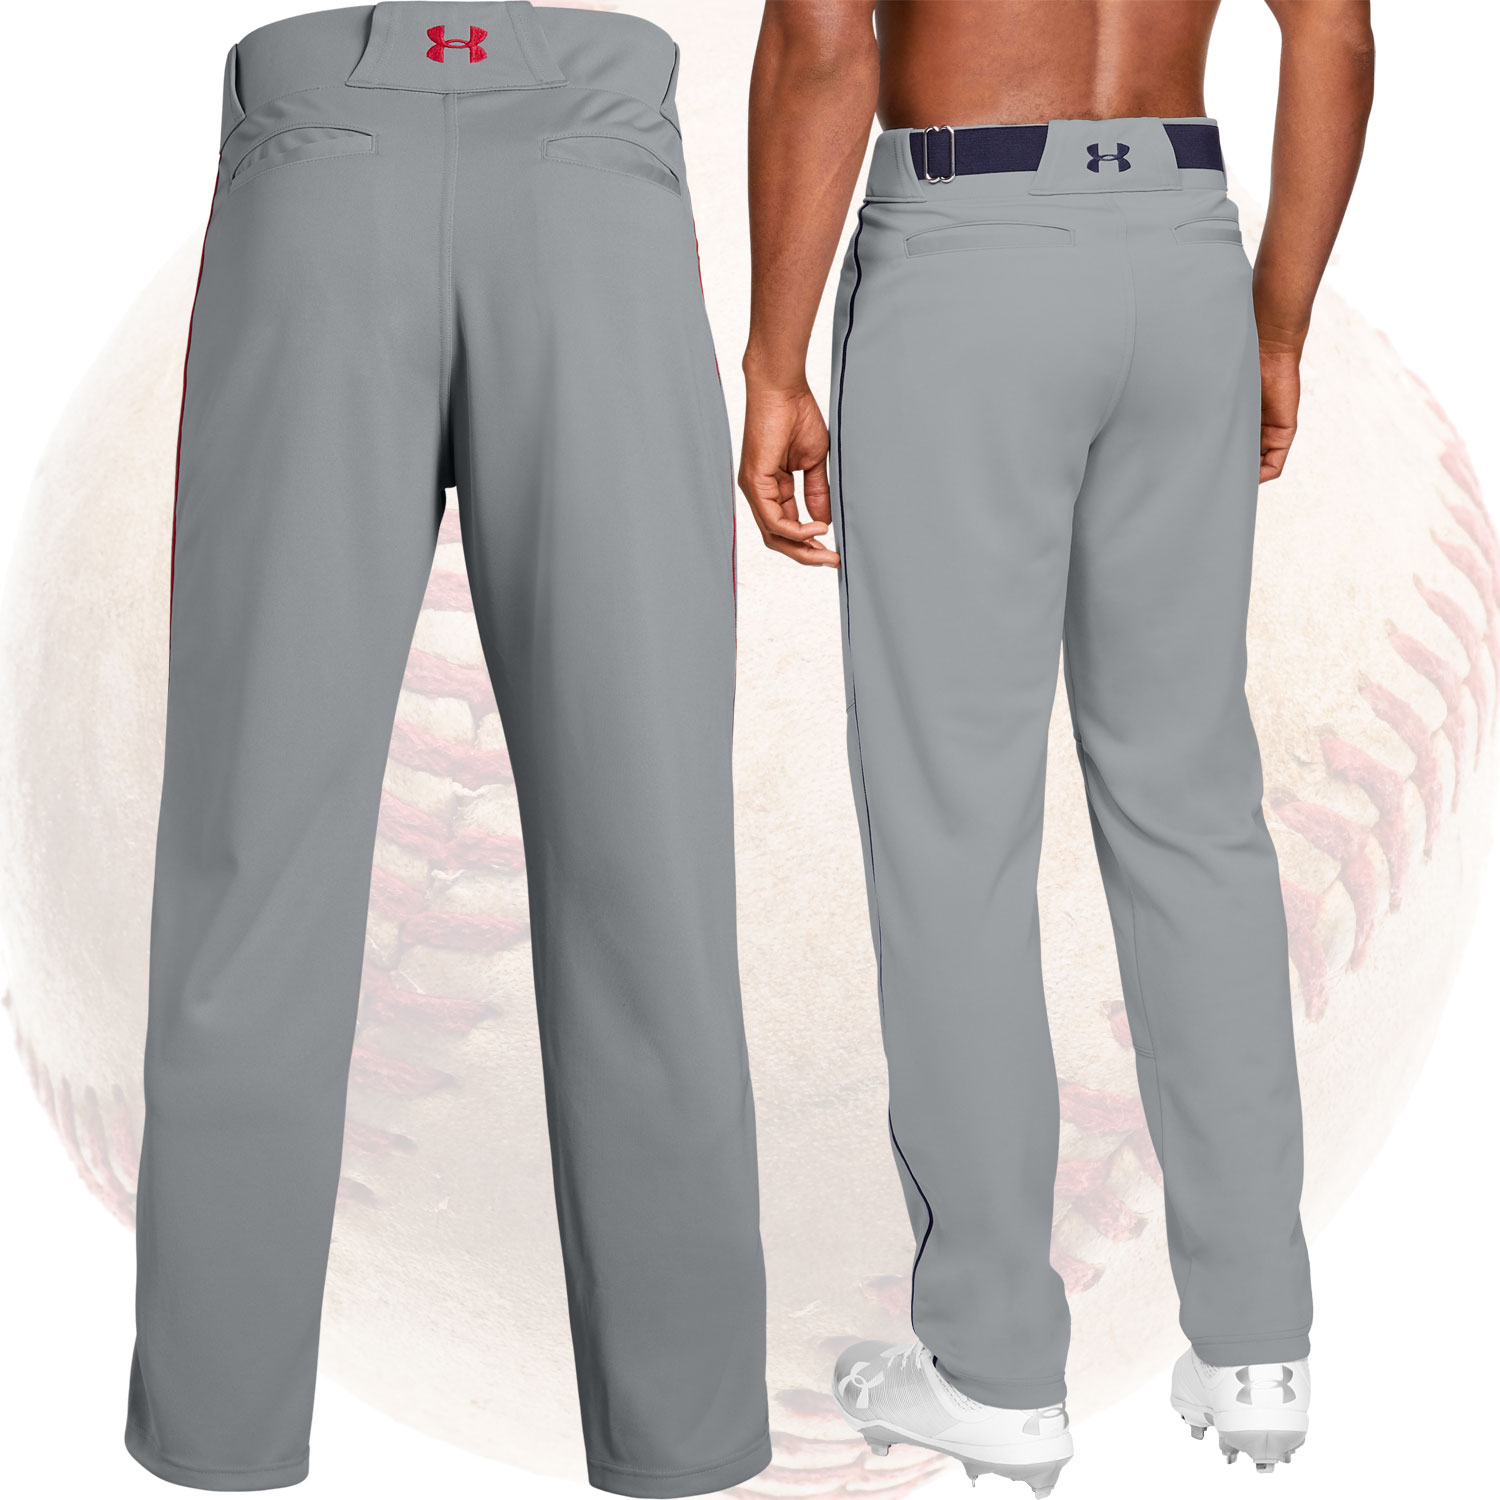 youth under armor baseball pants